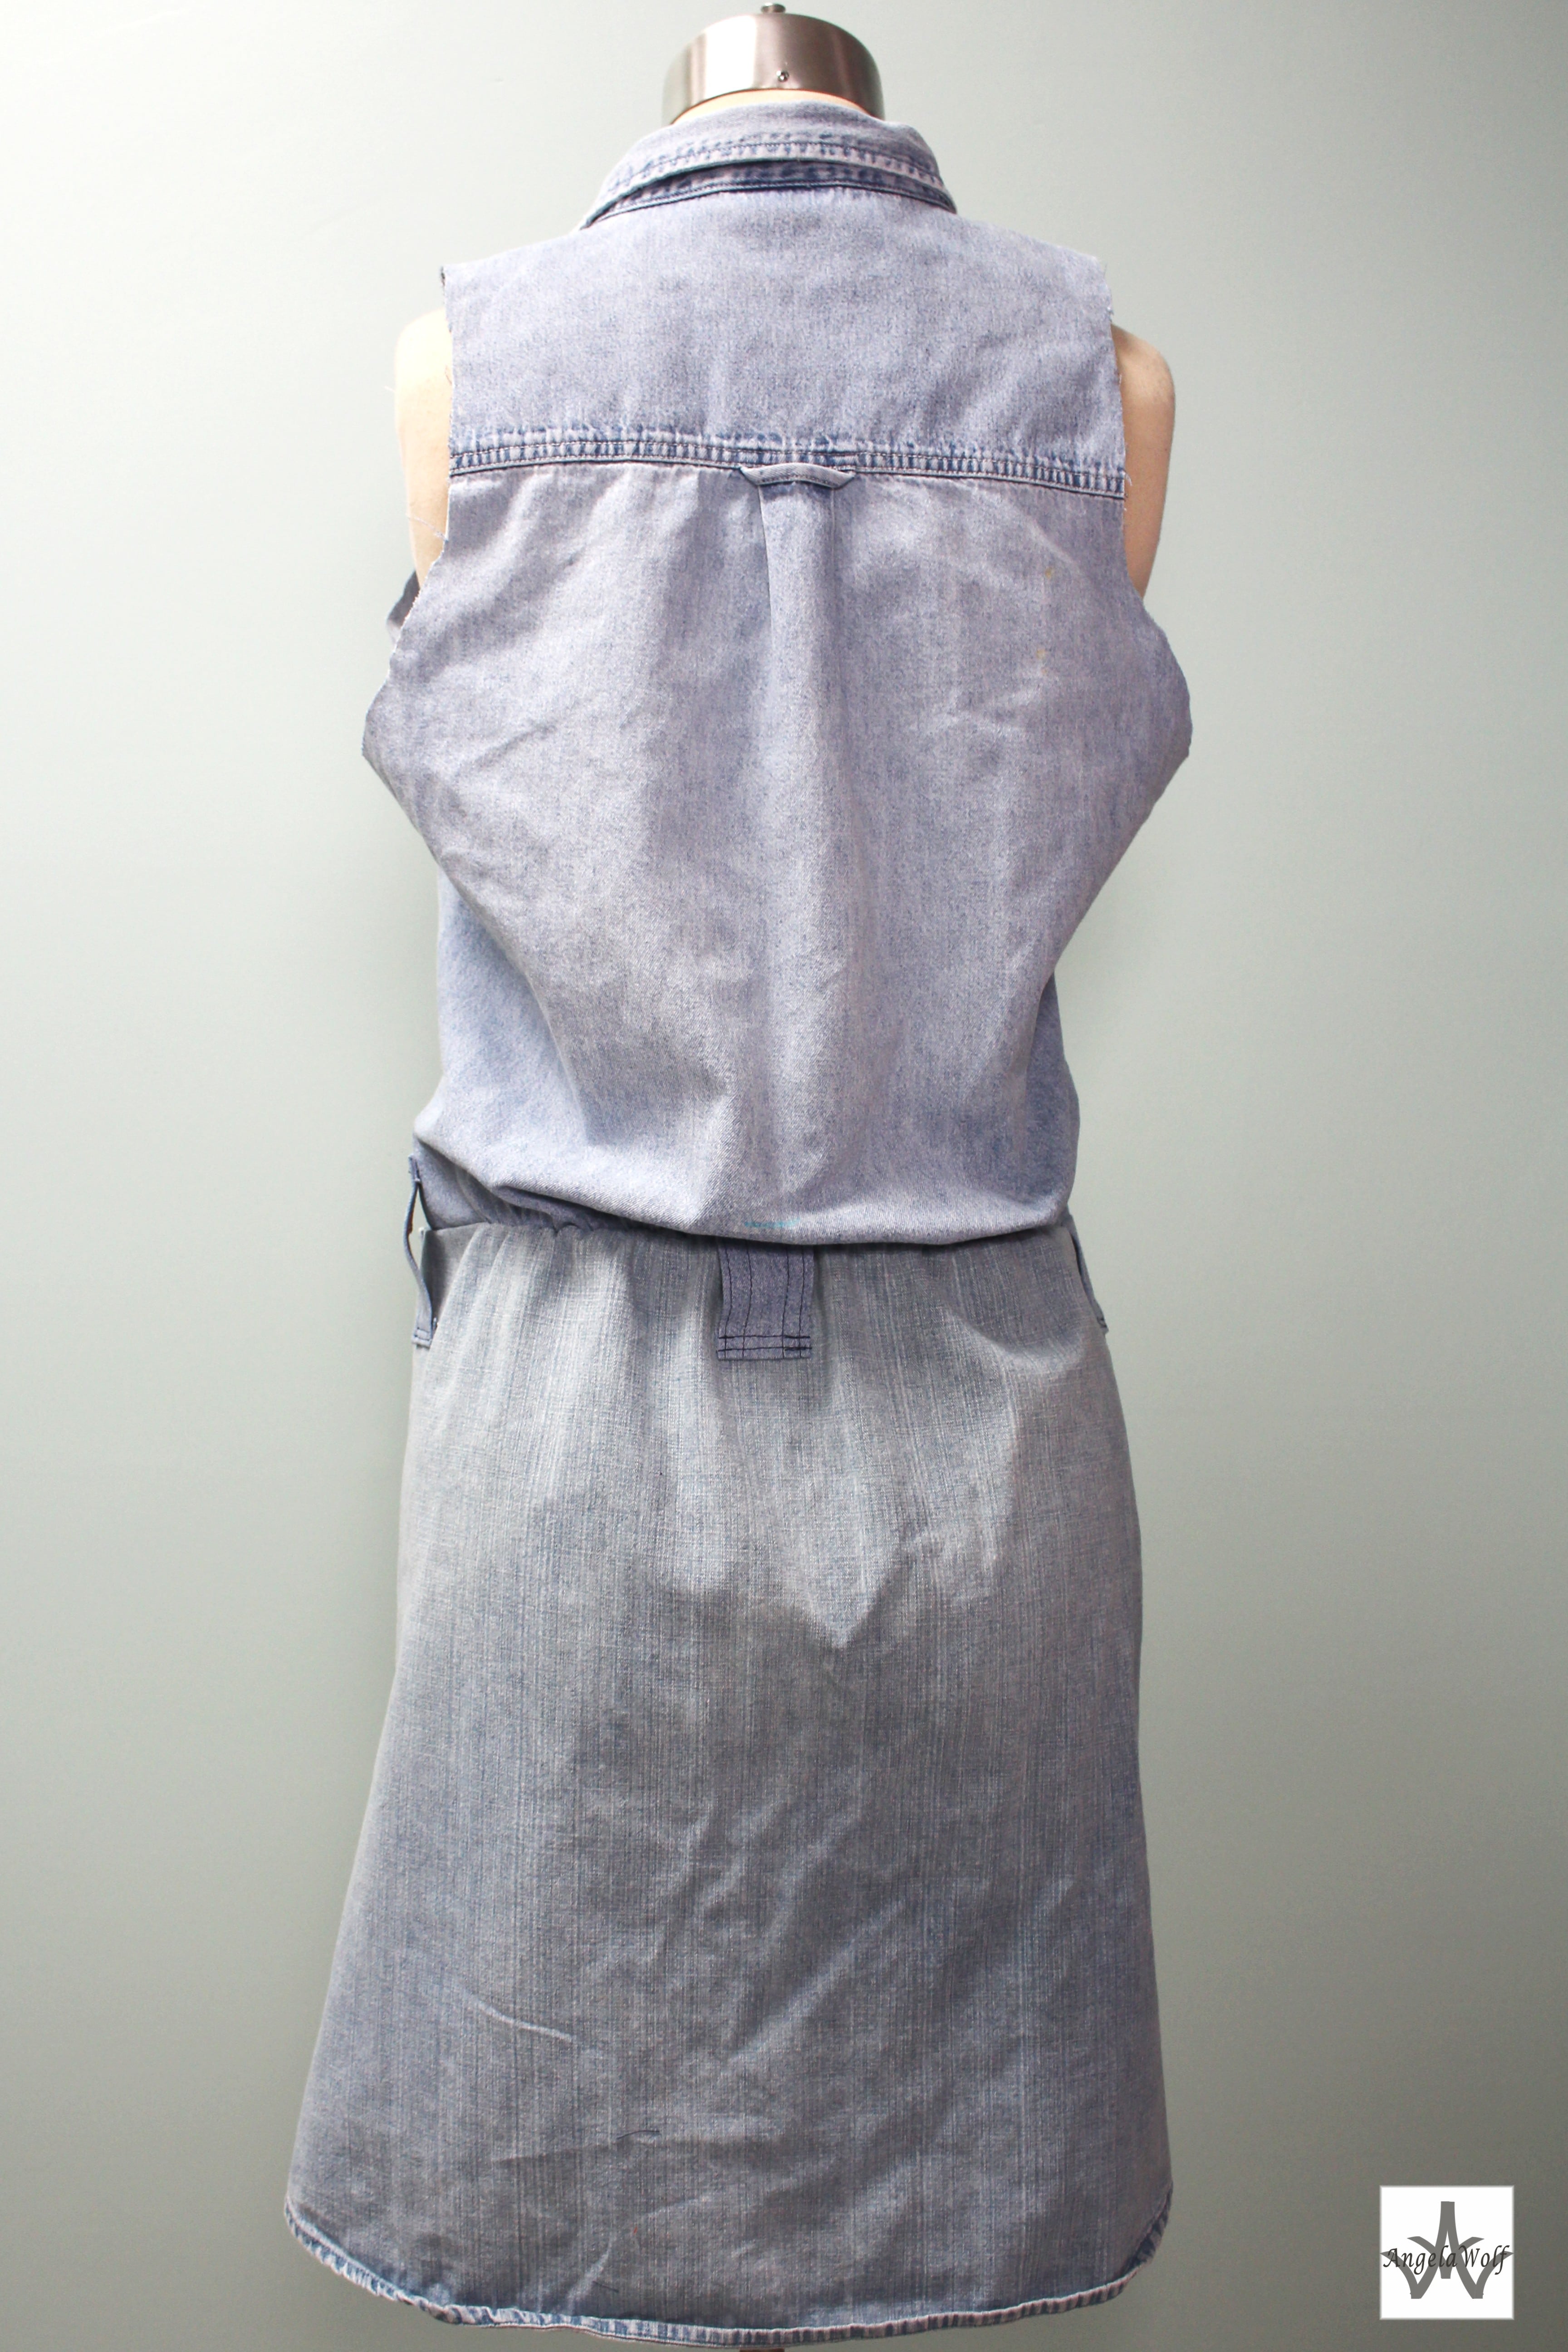 DIY Upcycle & Recycle 2 Denim Shirts into 1 Dress ~ Angela Wolf's ...